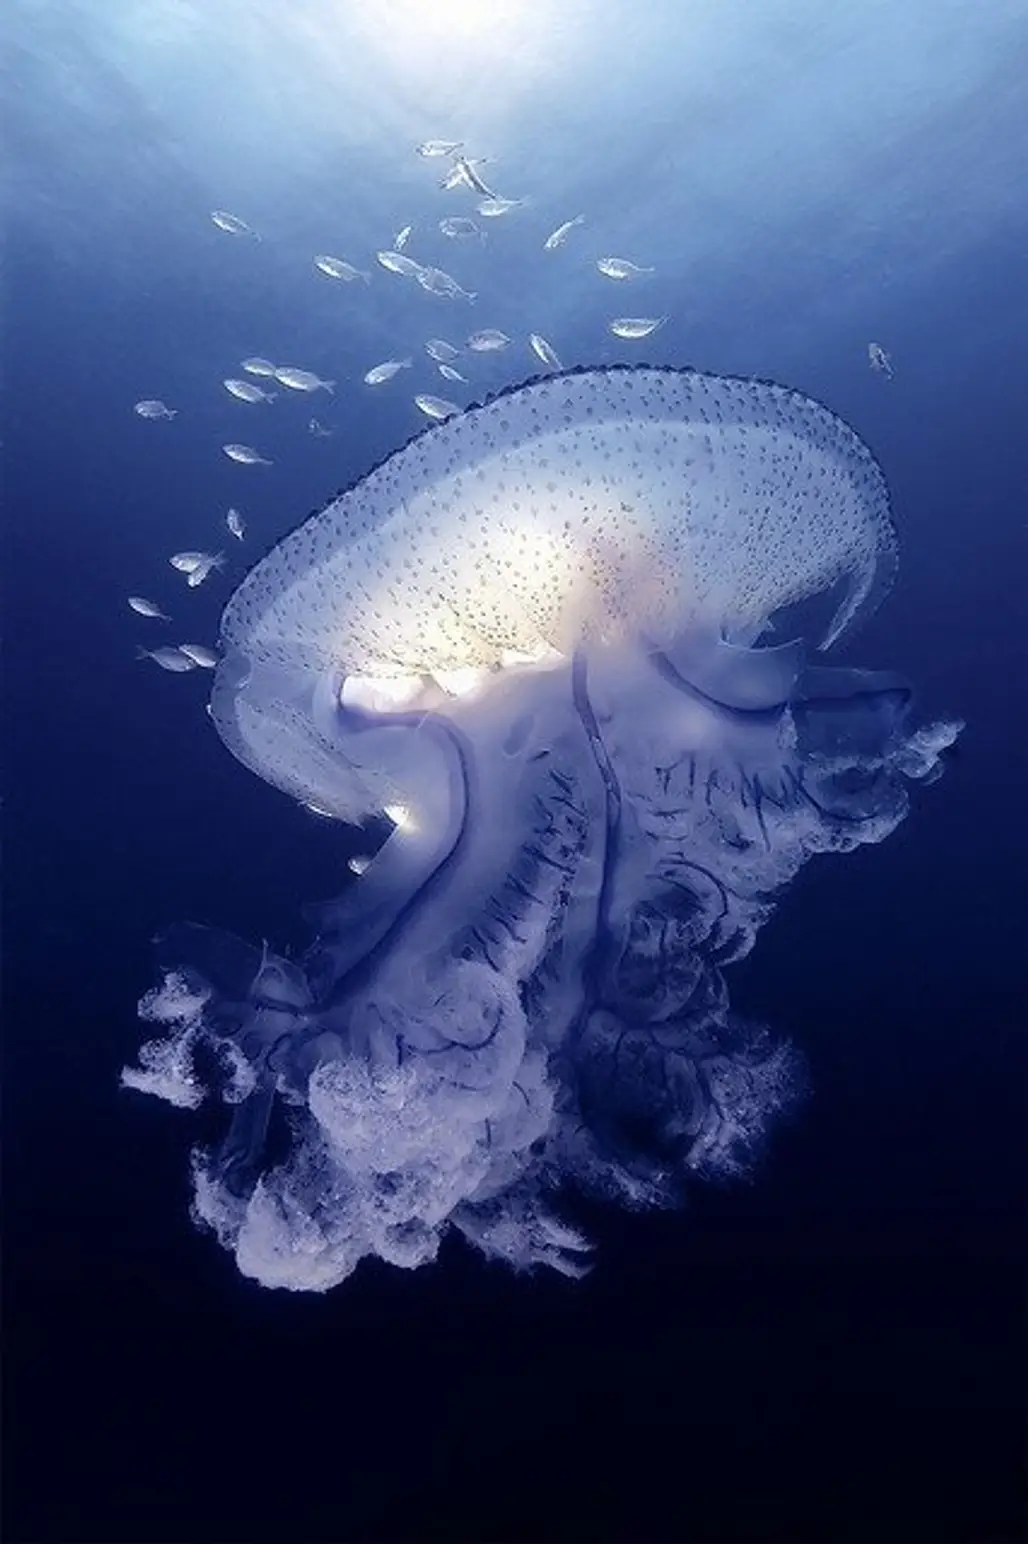 Massive Jellyfish